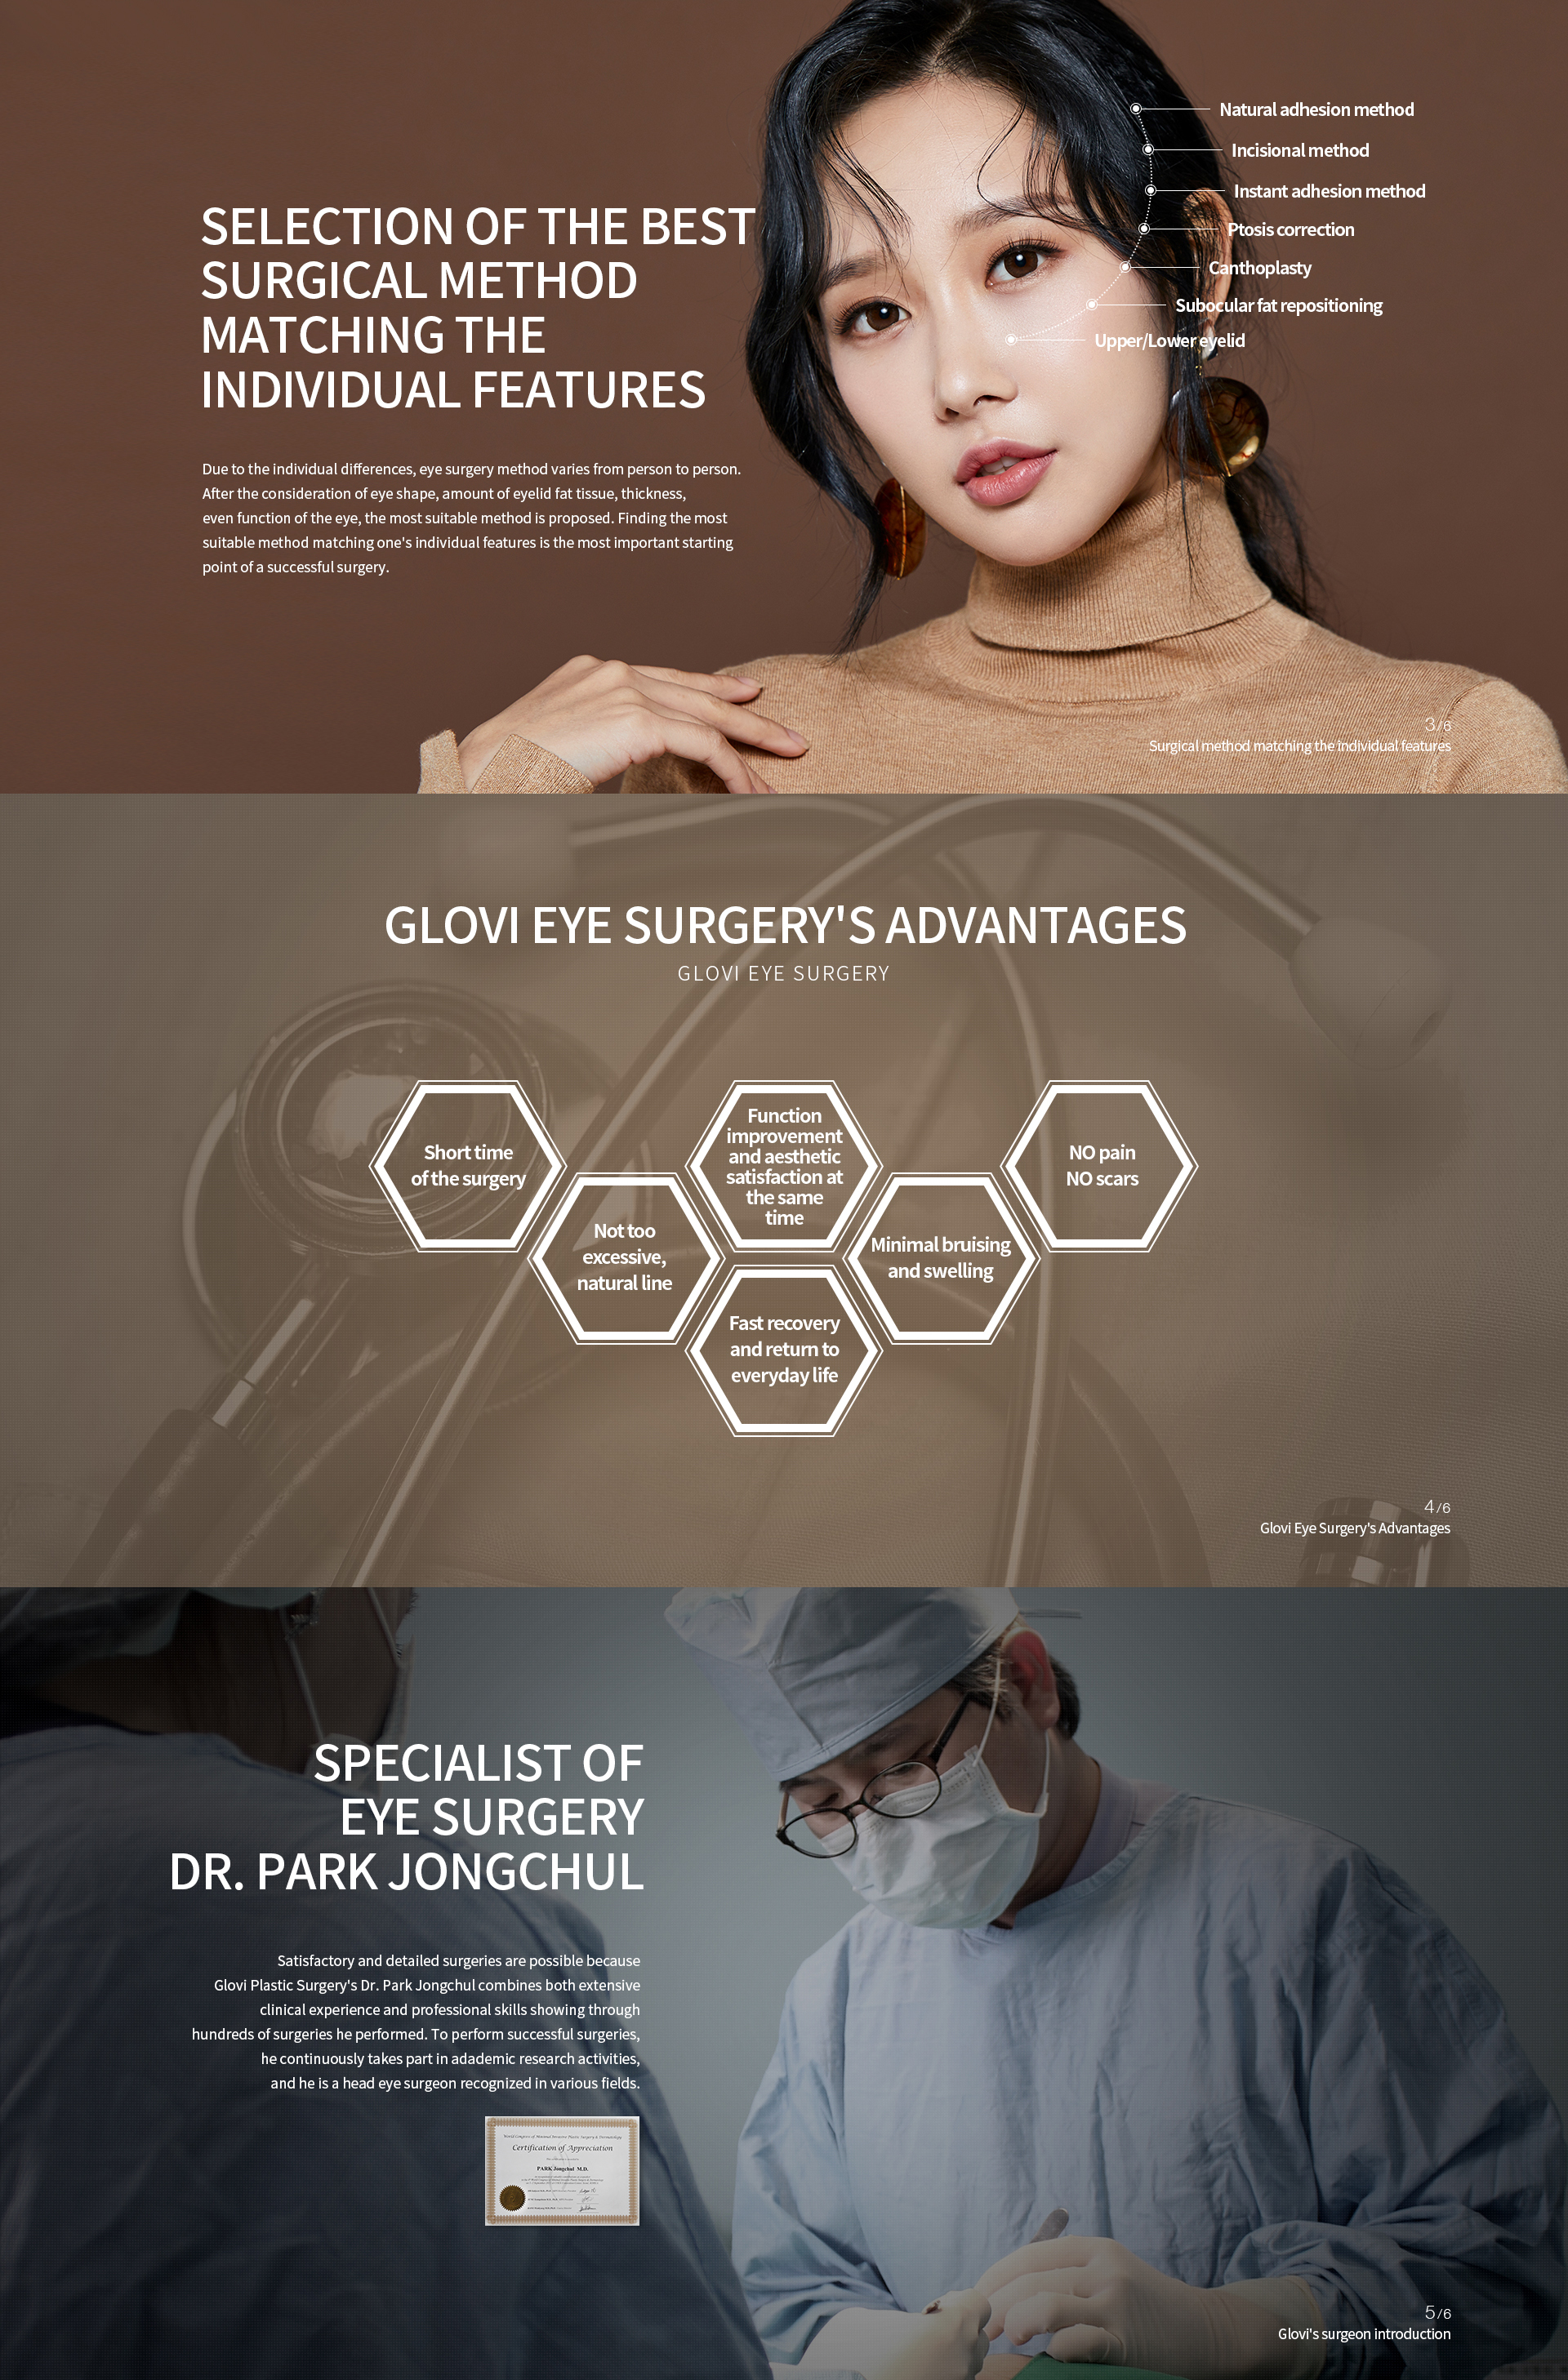 Glovi eye surgery img